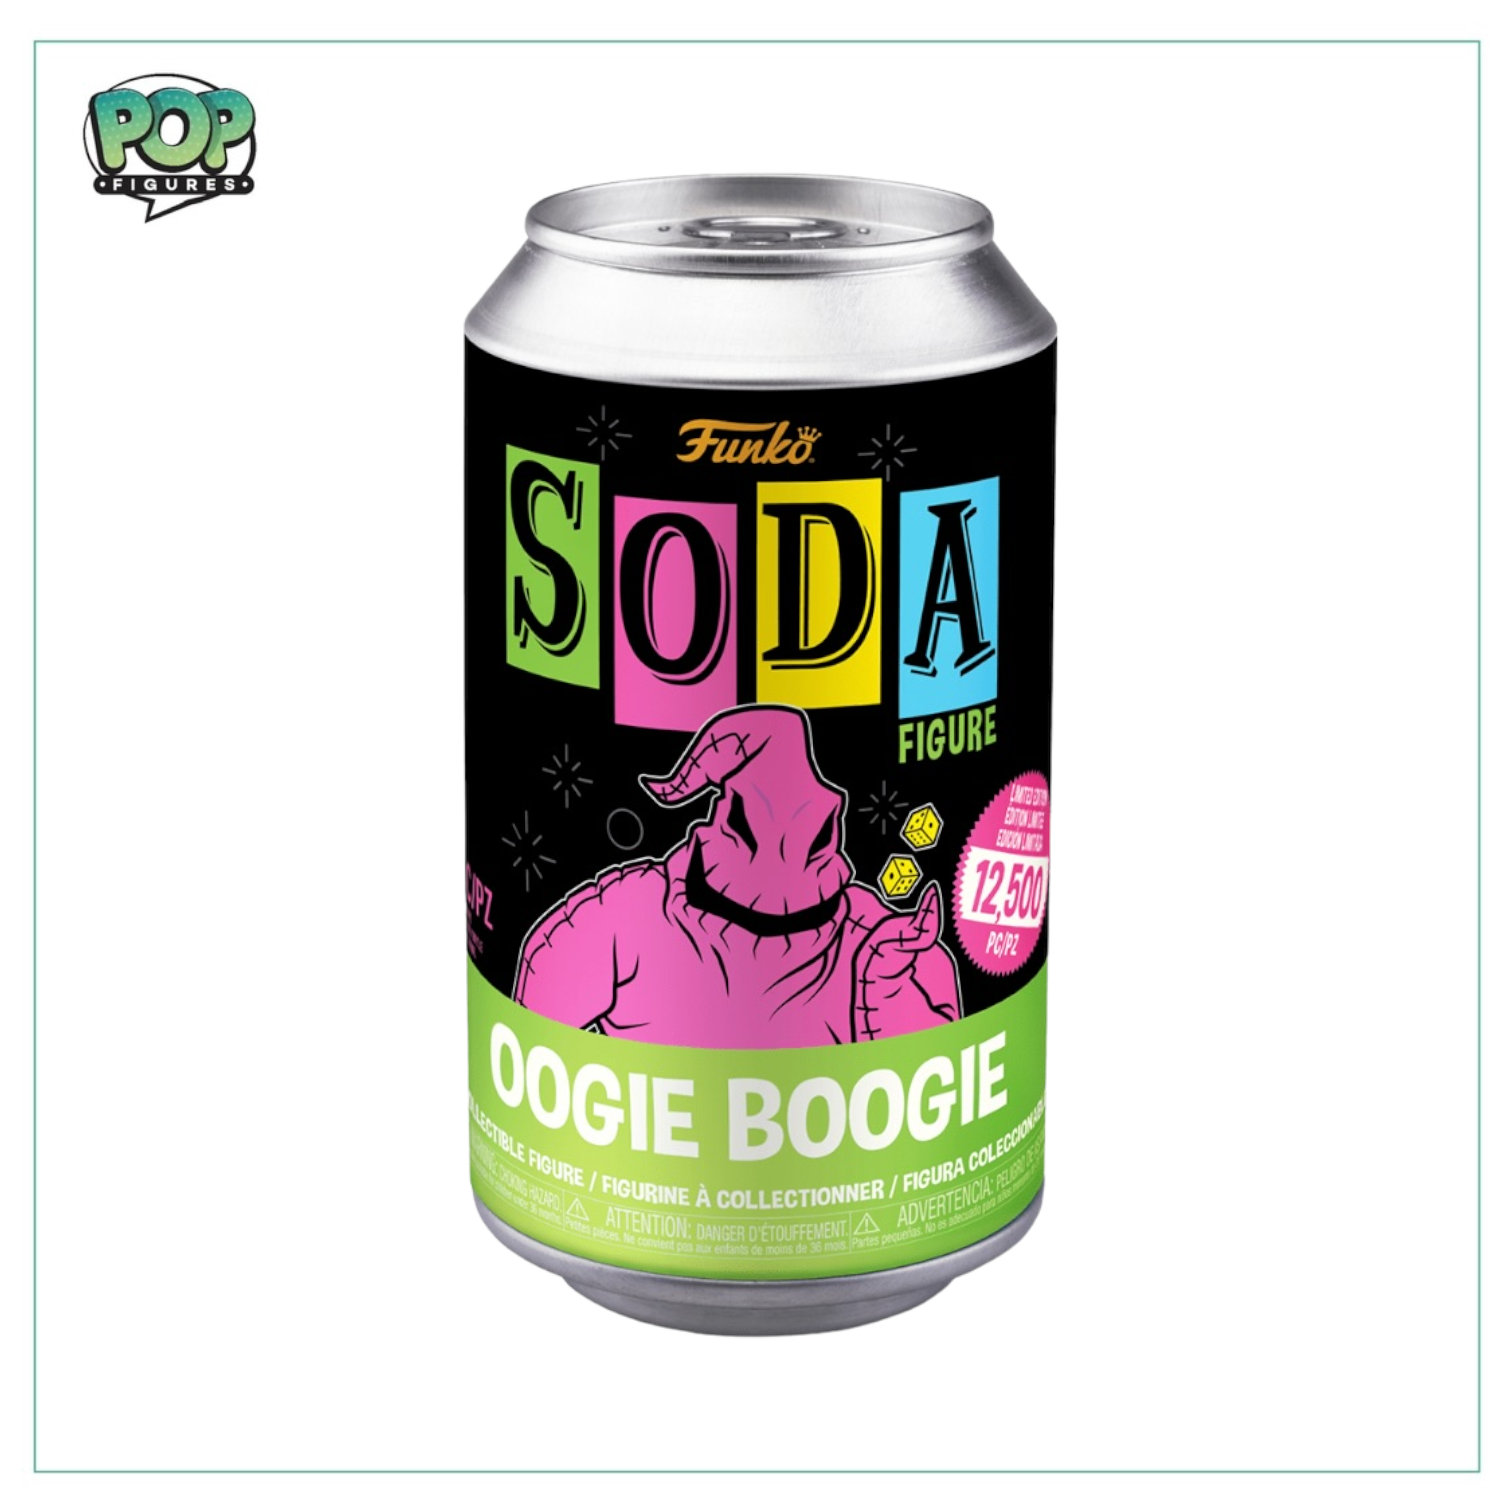 Oogie Boogie Soda Funko Soda Vinyl Figure! - NBC-  LE12,500 Pcs - Chance Of Chase